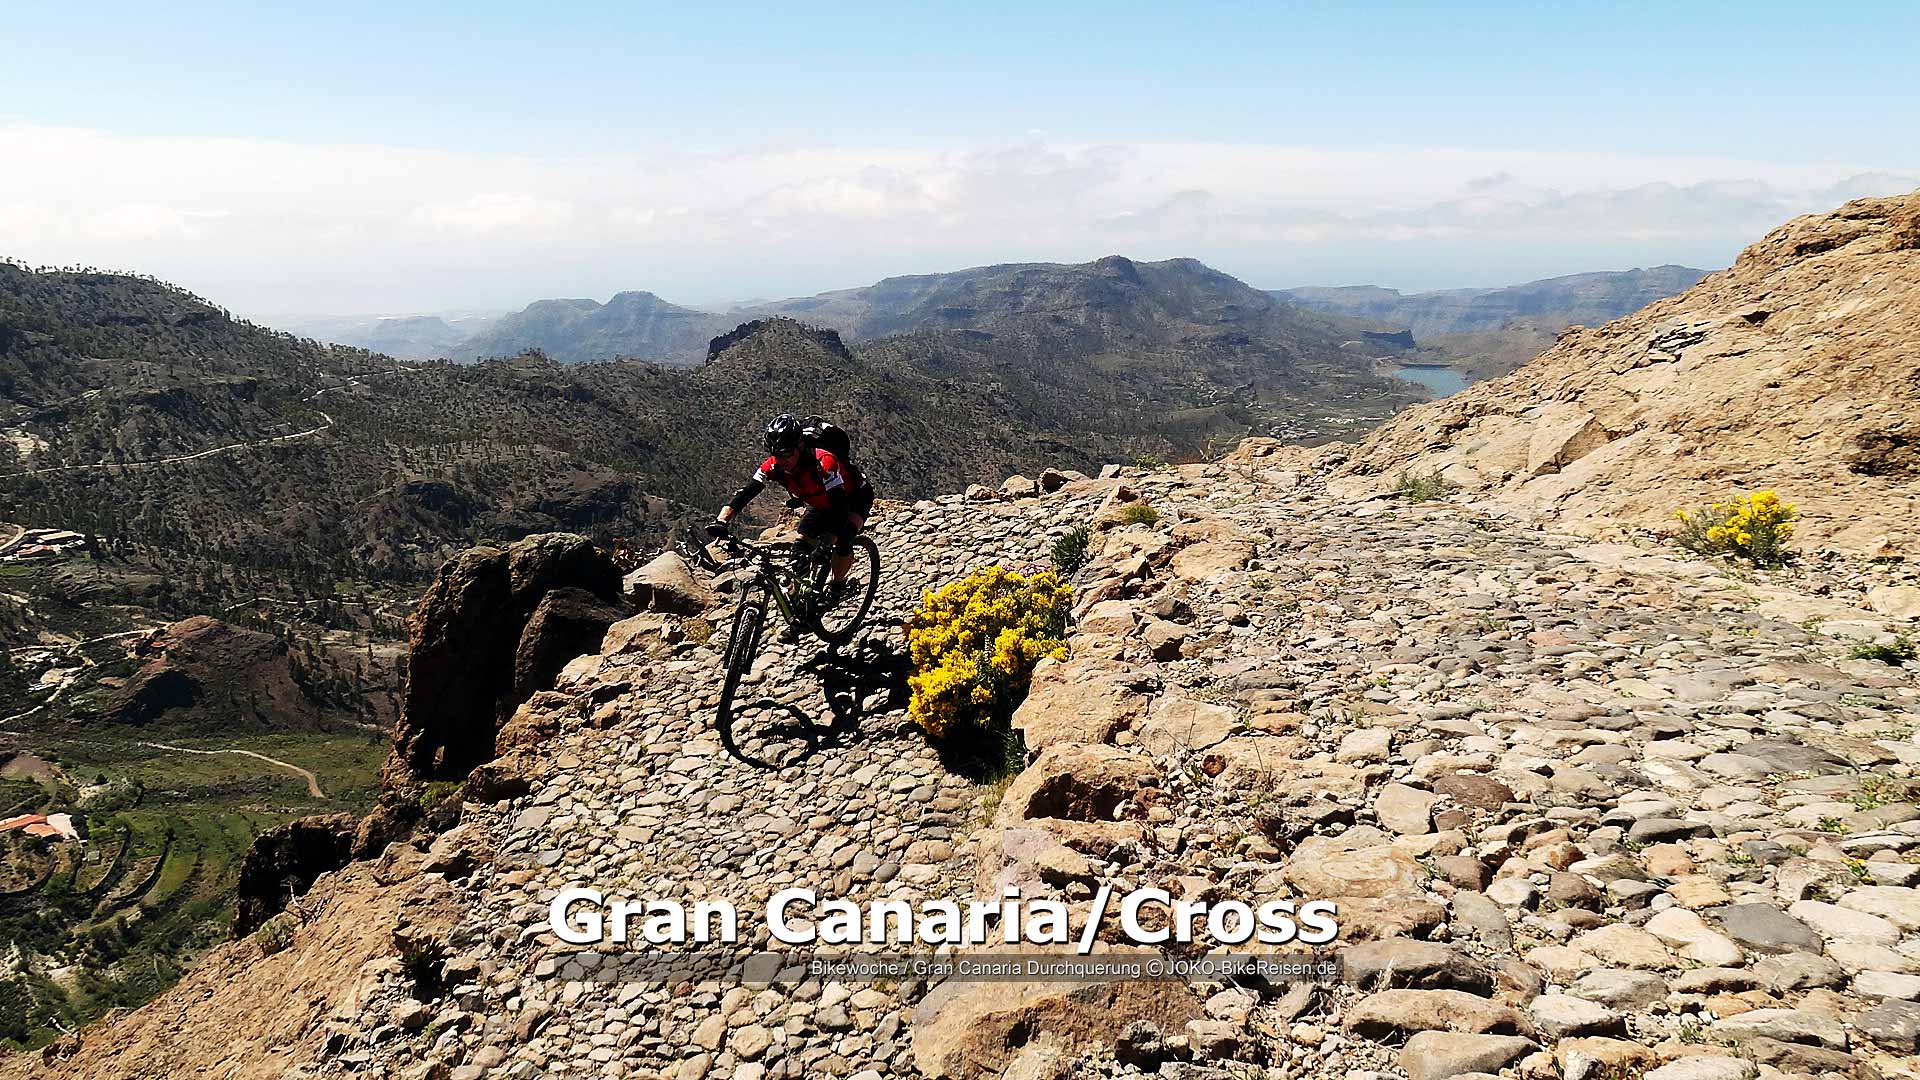 Mountainbike Gran Canaria Durchquerung, Singletrail-Biketouren & Fahrtechnikschulung